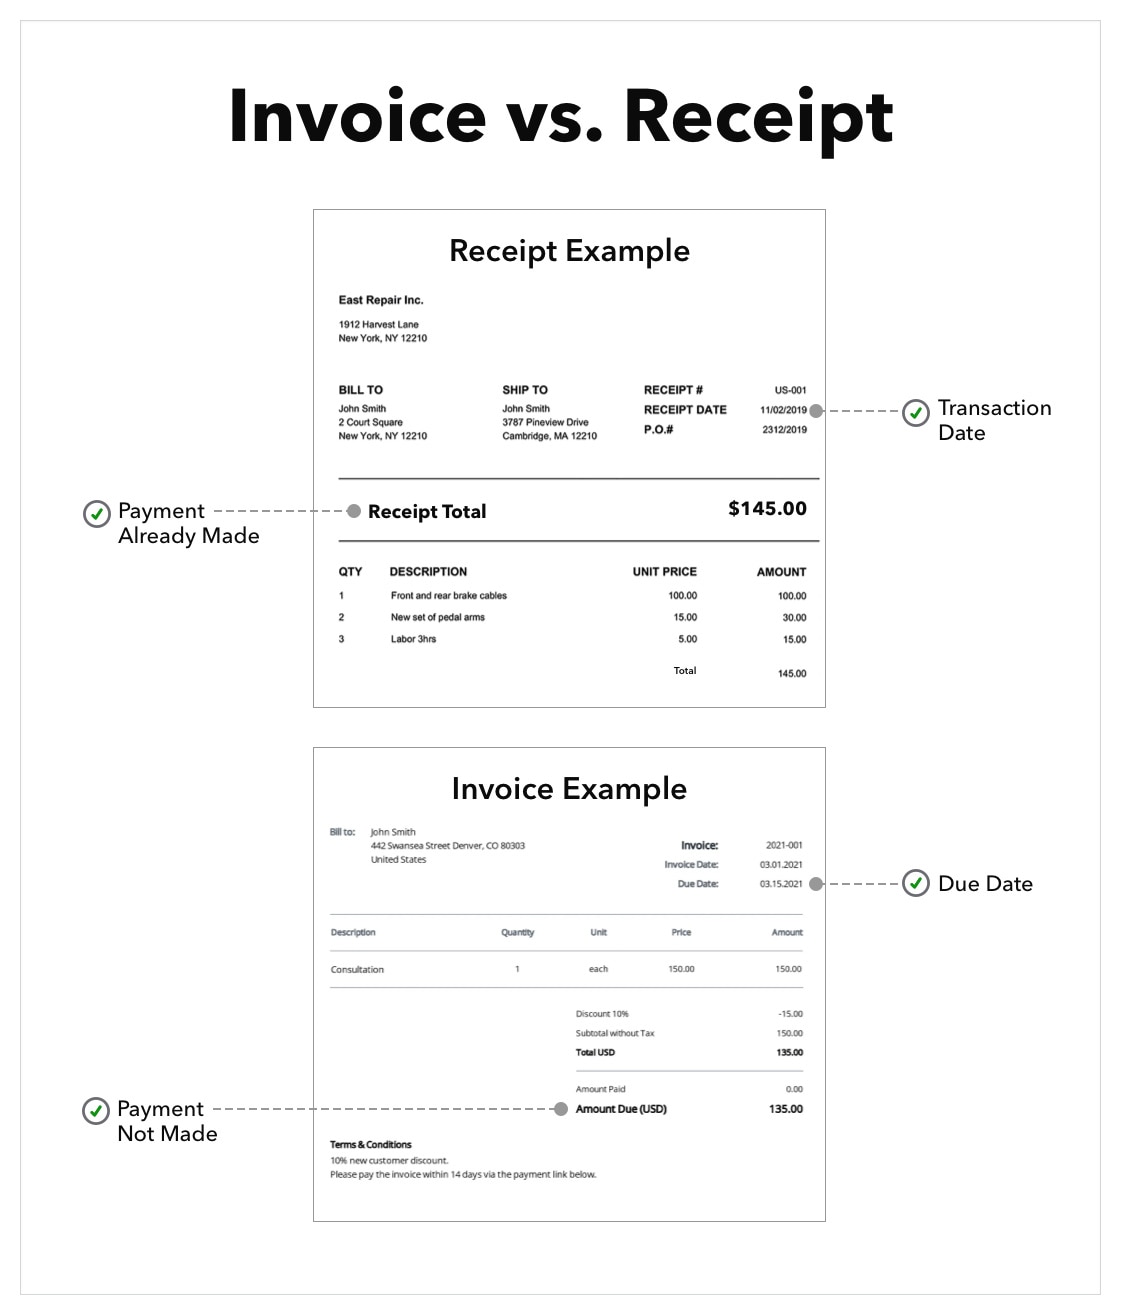 QuickBooks Invoice vs receipt example